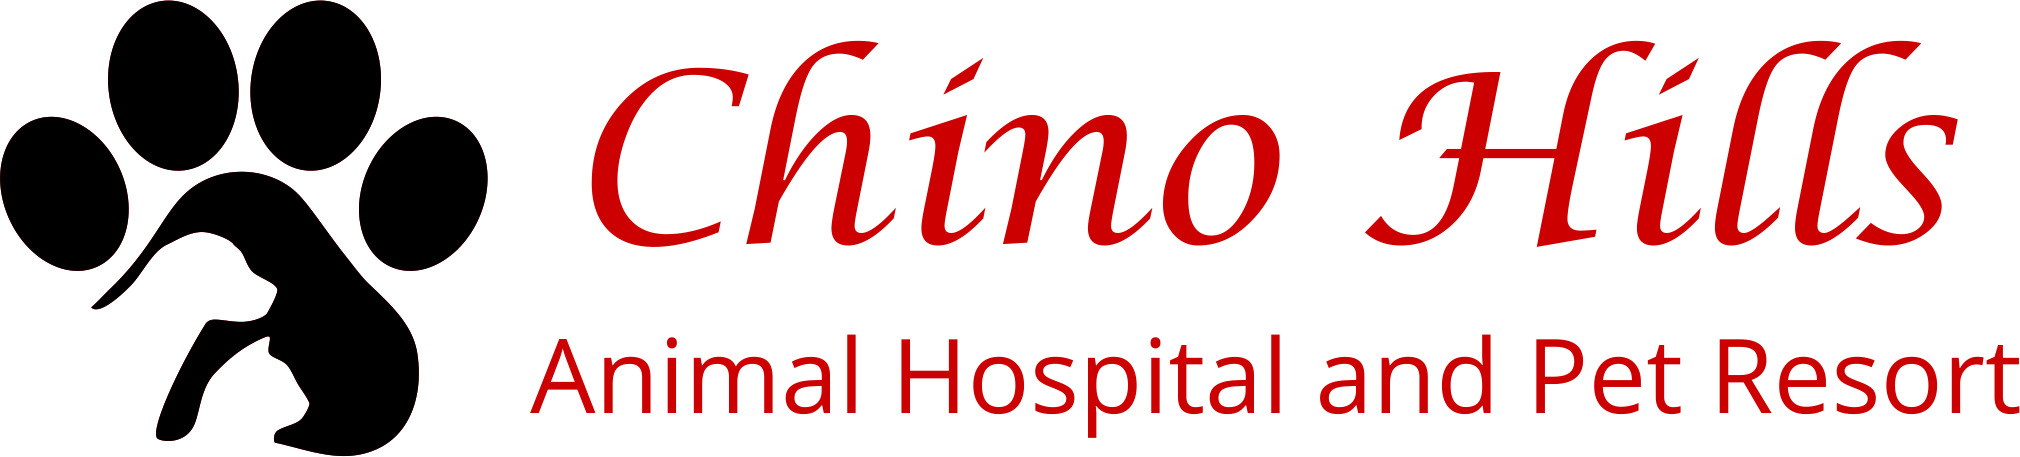 Chino Hills Animal Hospital and Pet Resort